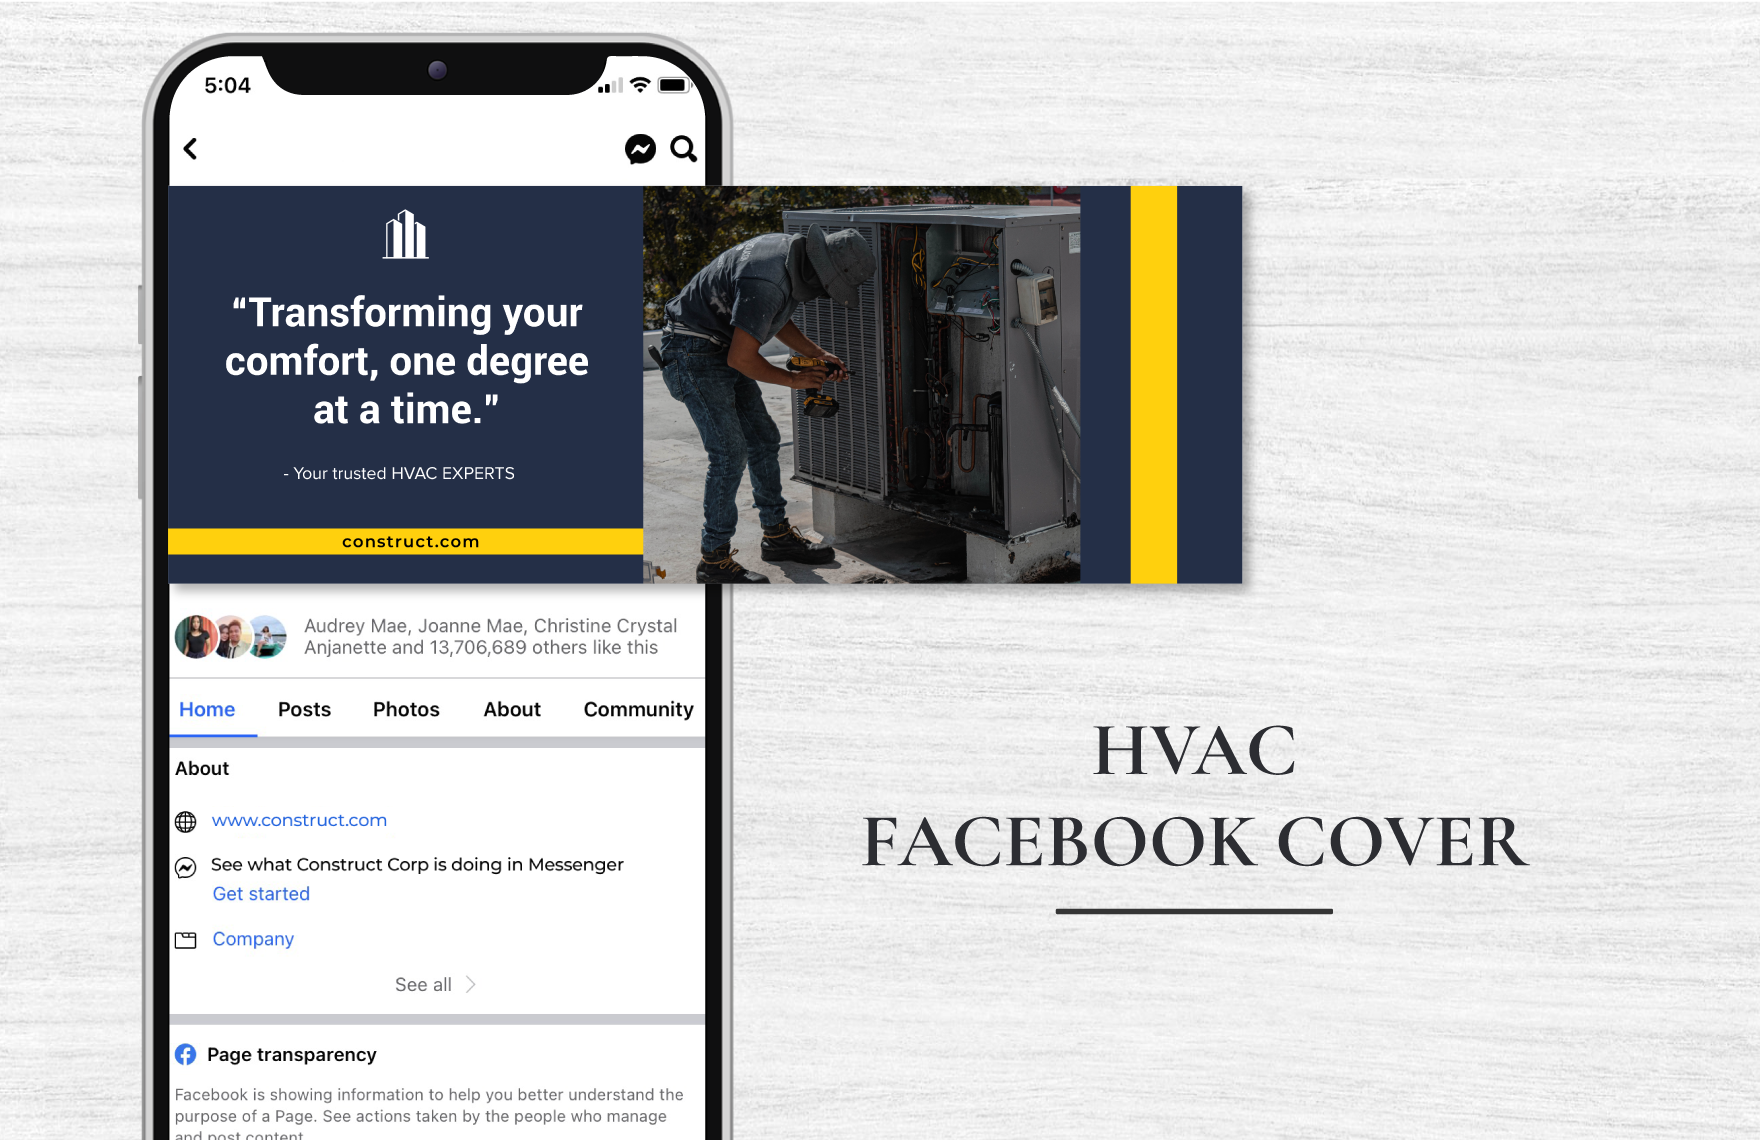 HVAC Facebook Cover